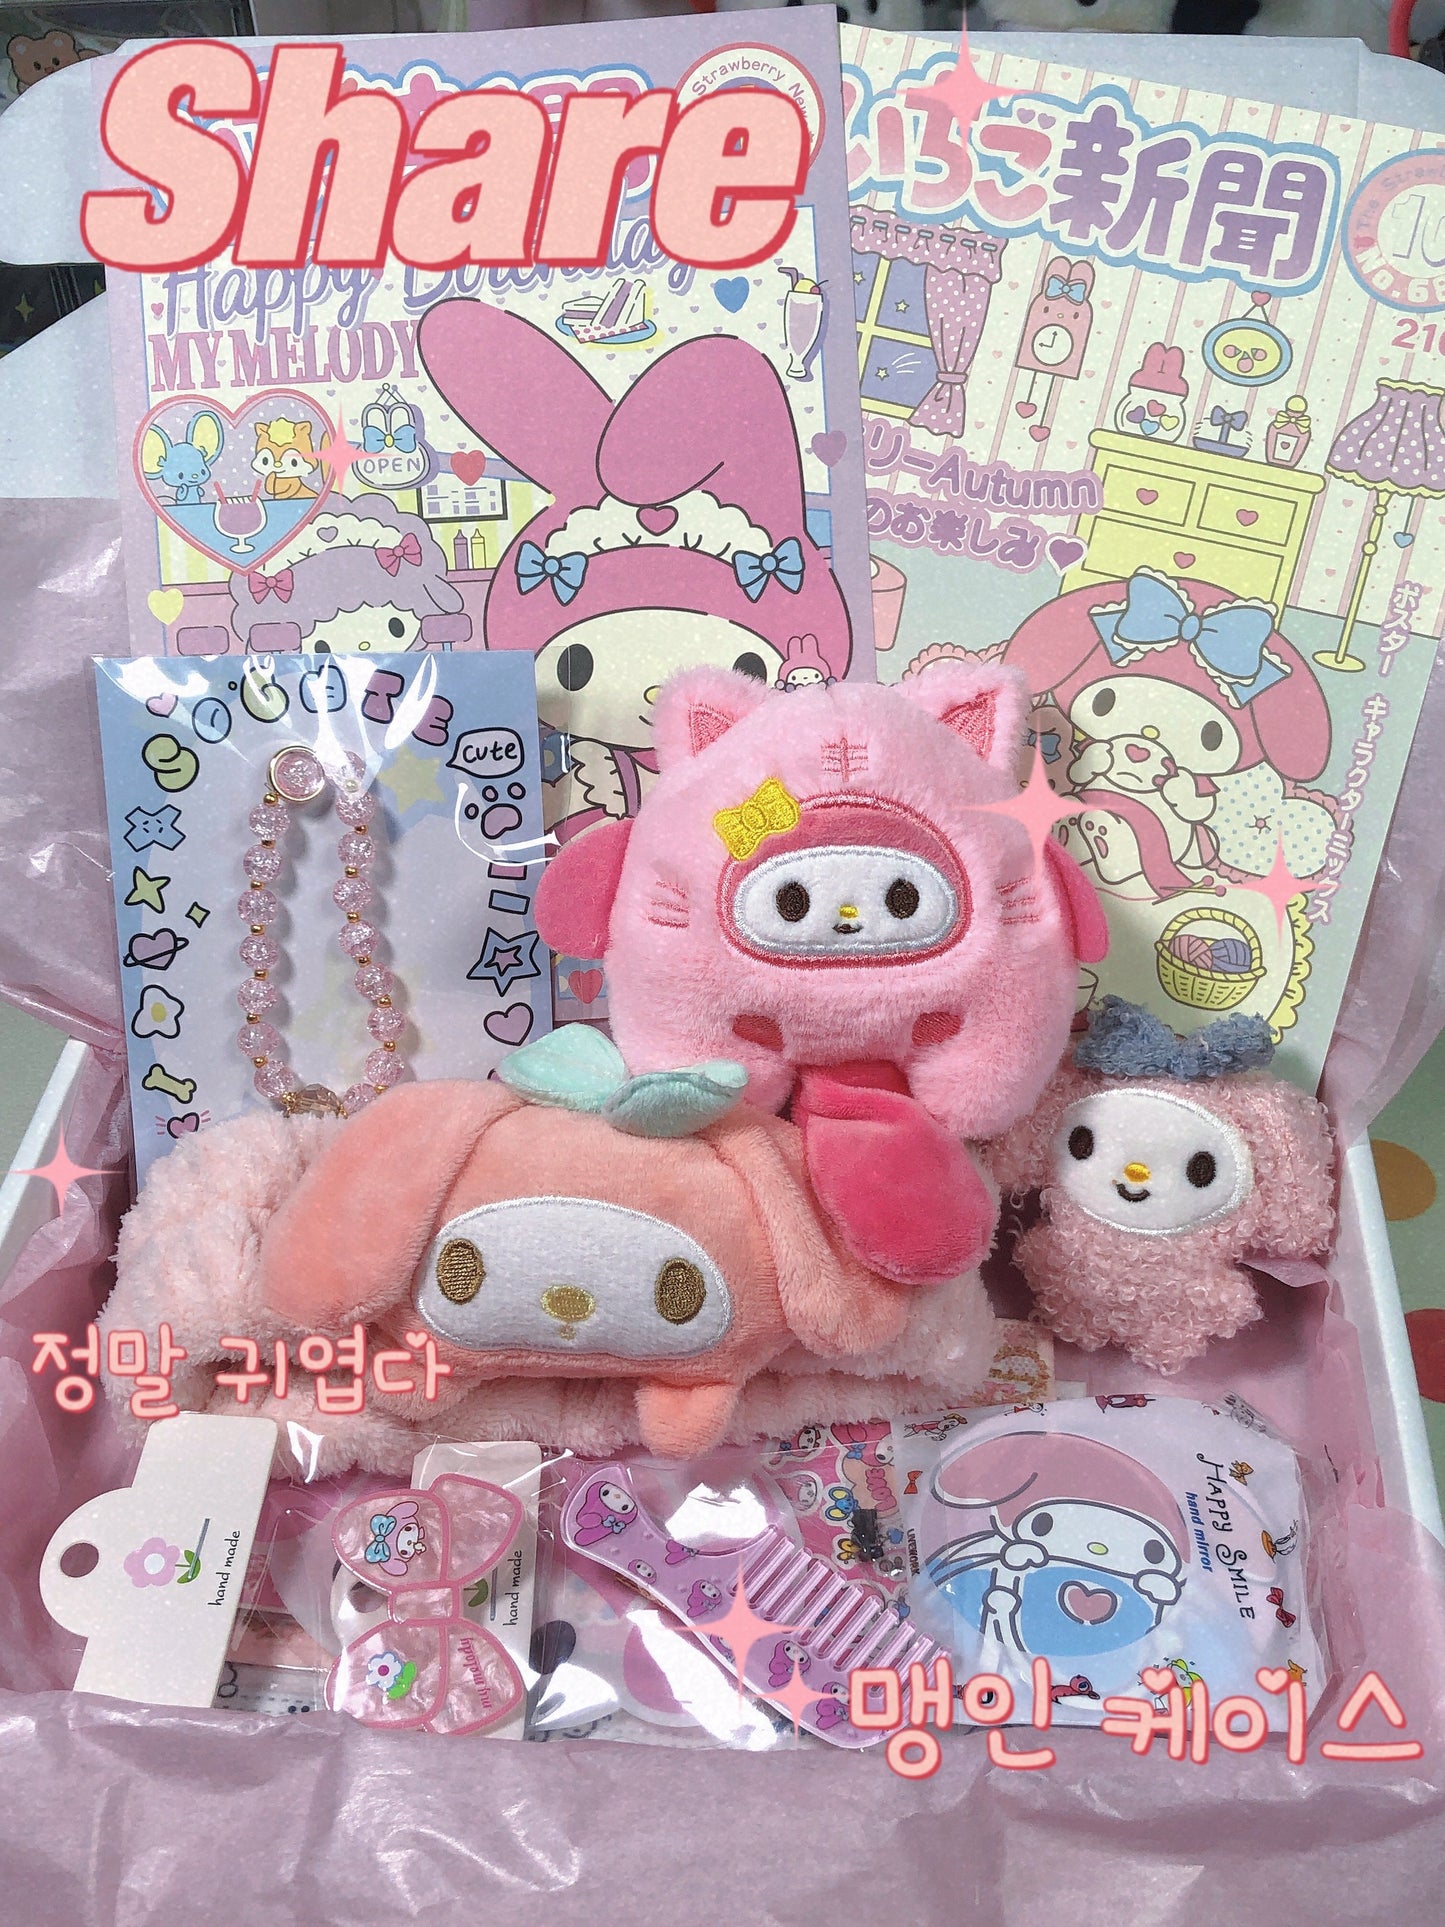 My Melody Mystery Gift Box - In Kawaii Shop